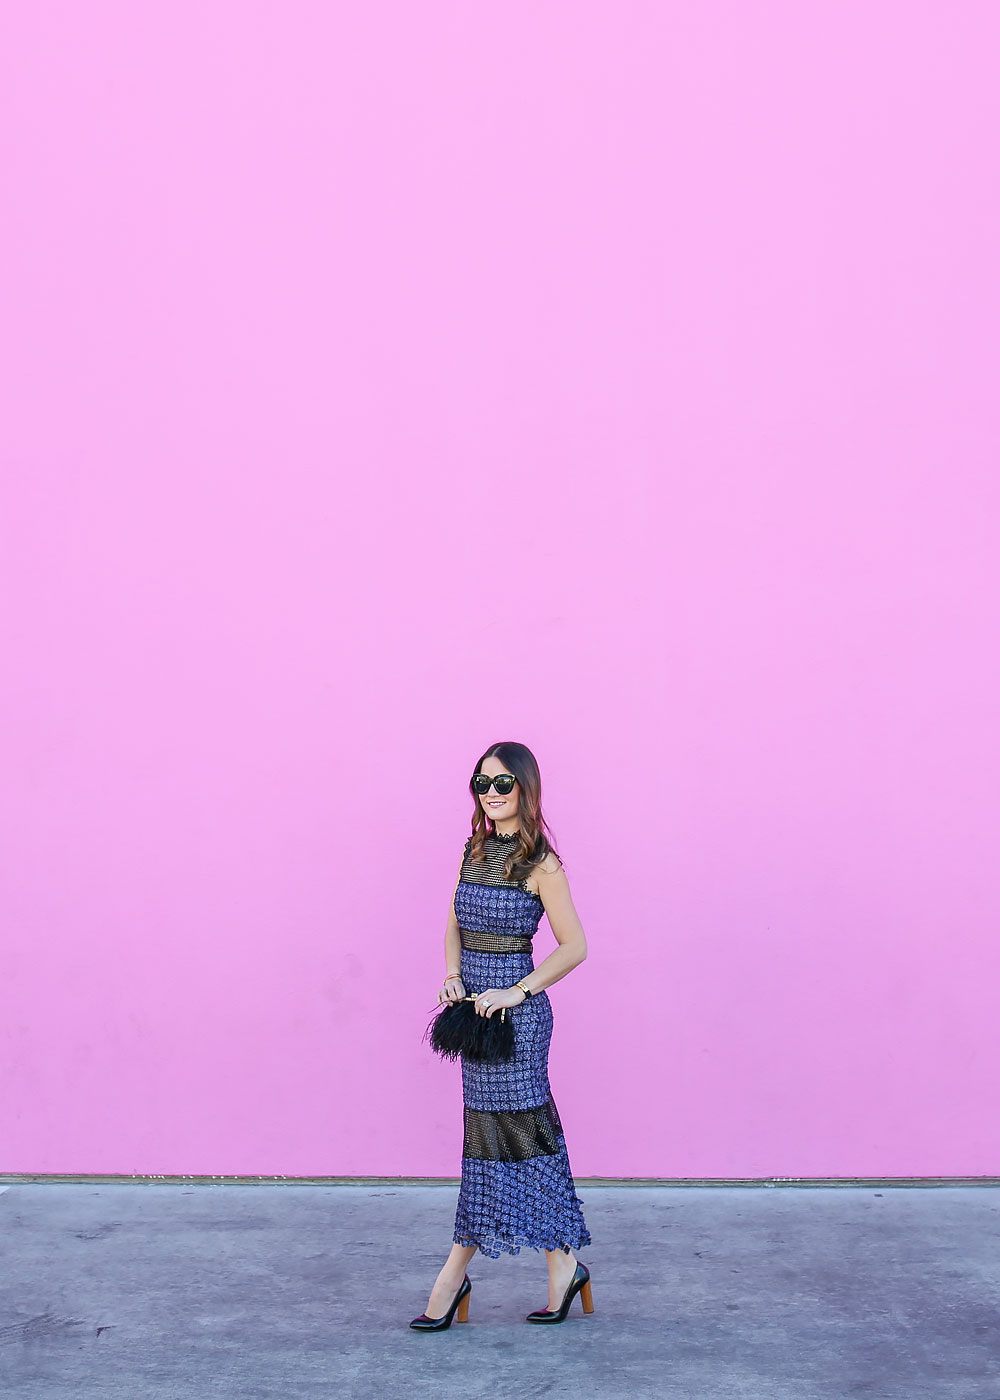 Los Angeles Pink Wall